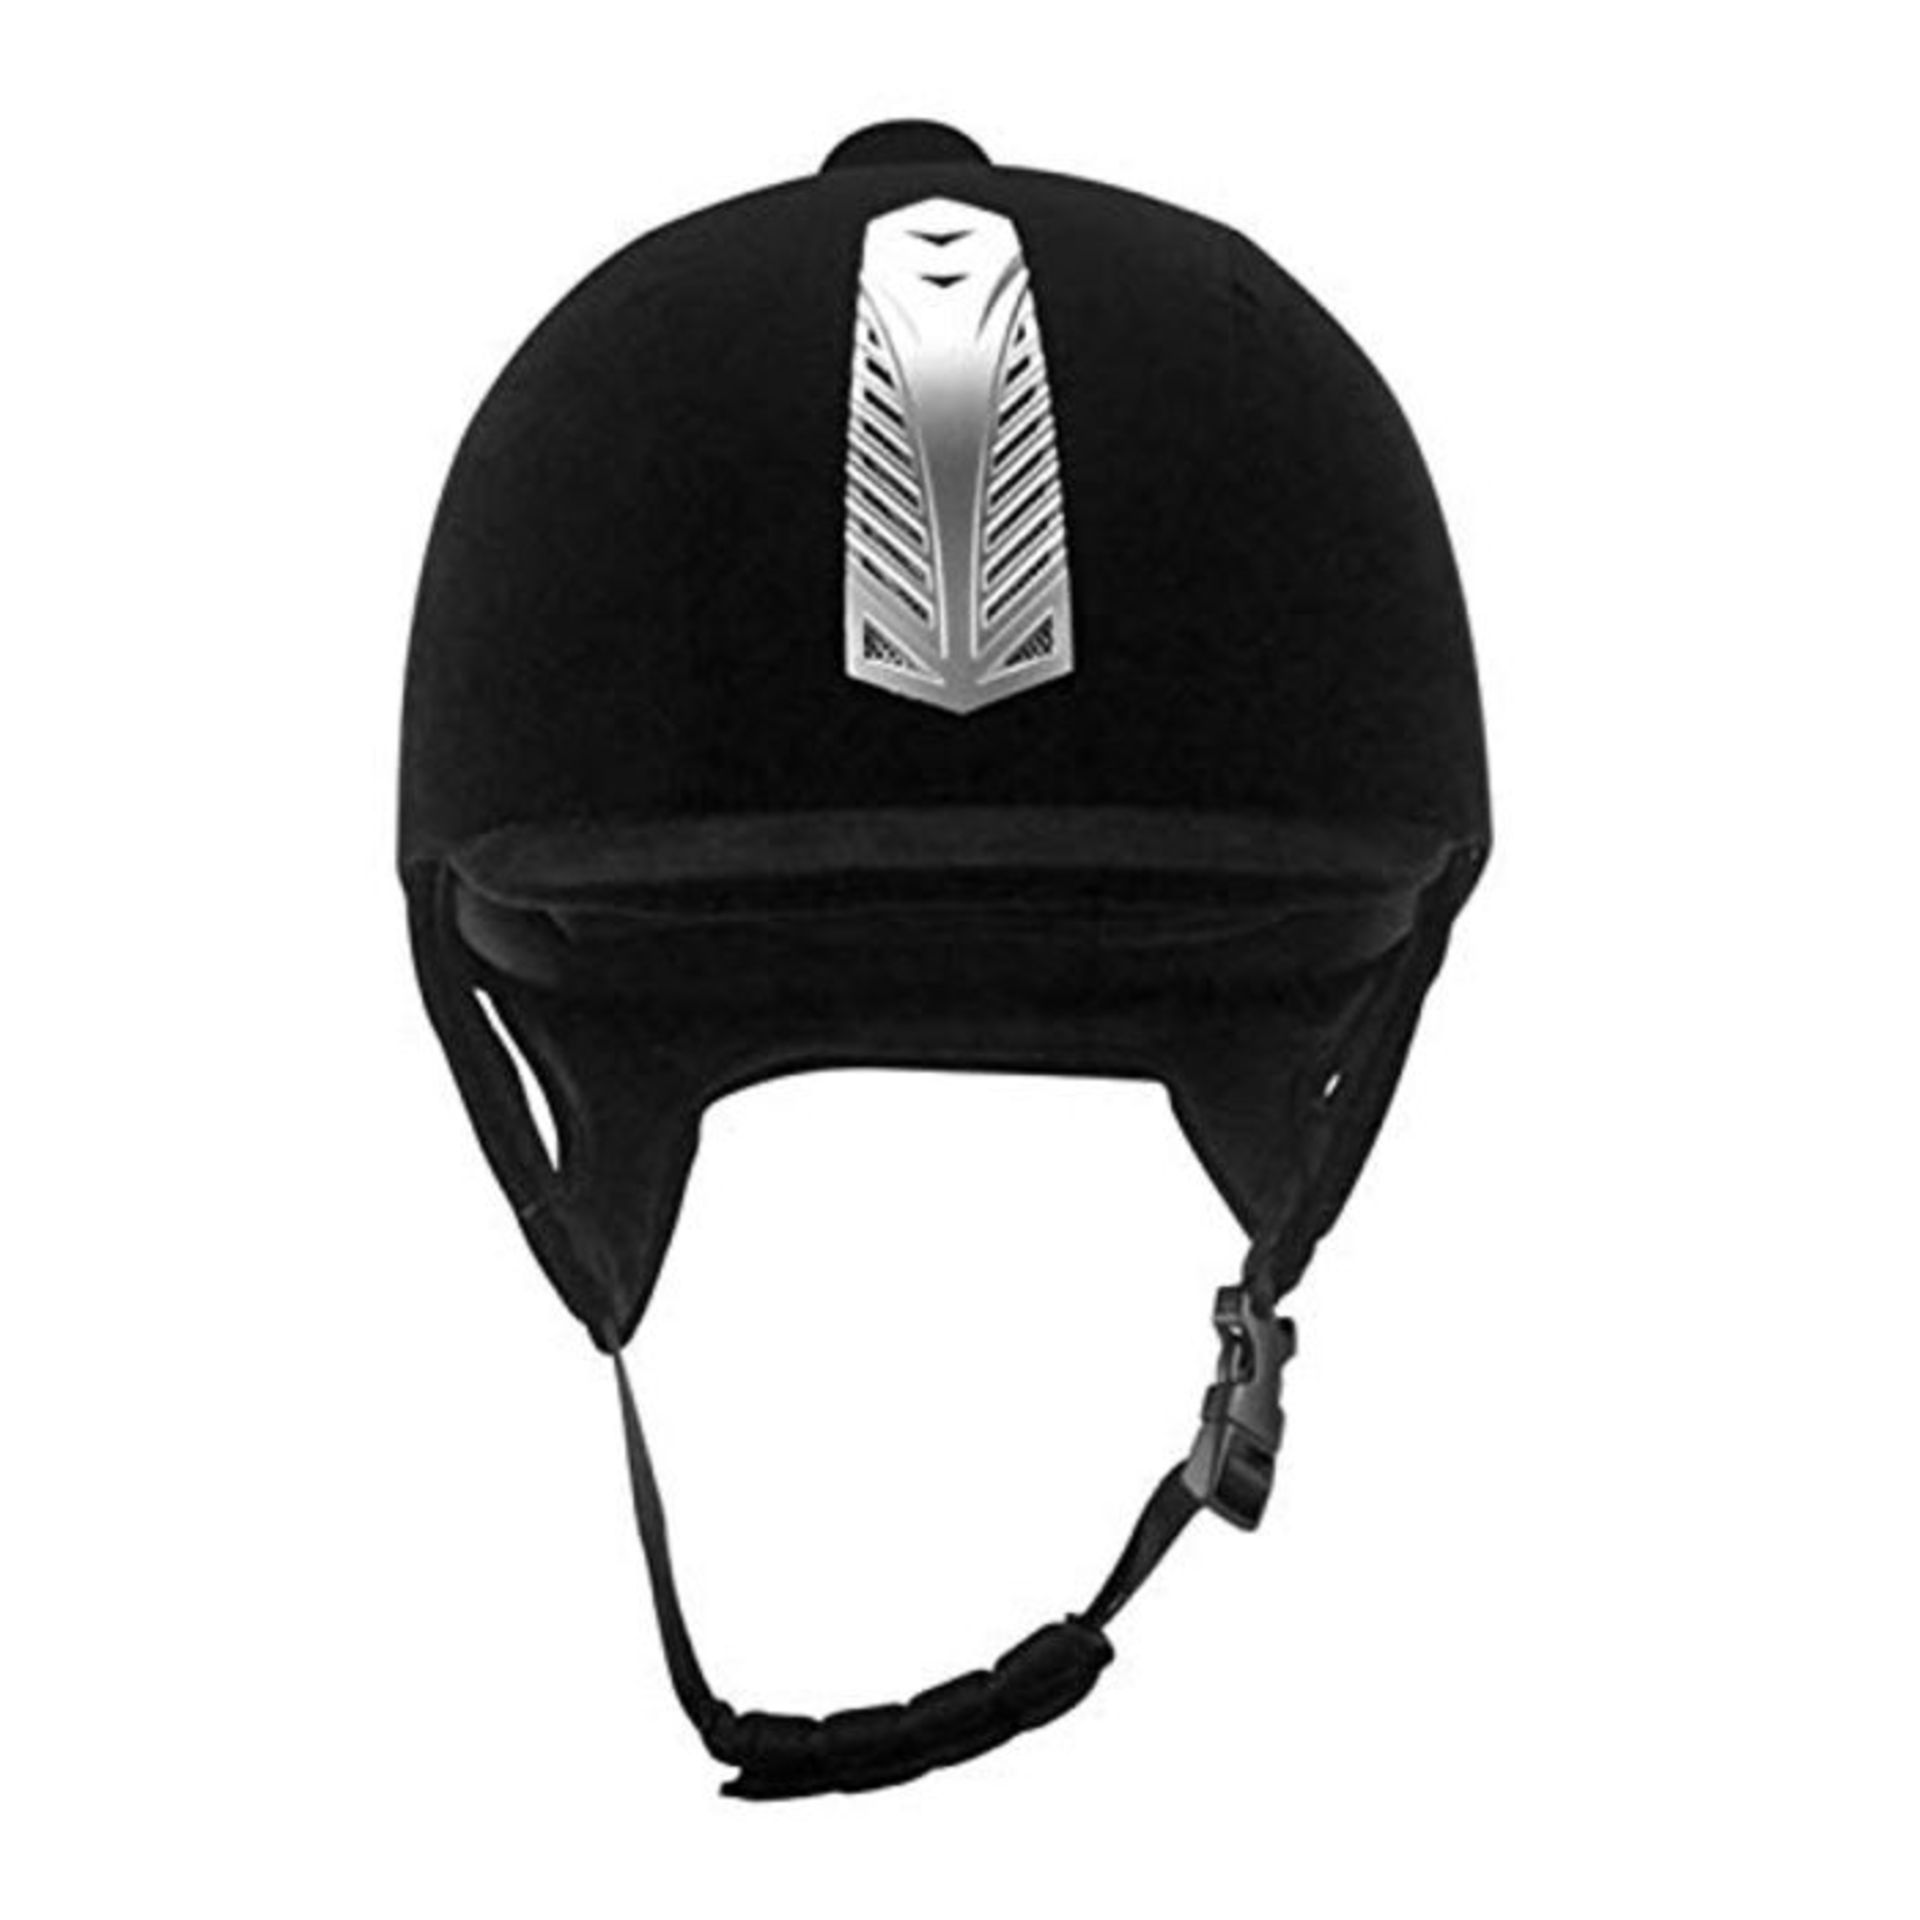 Equestrian Helmet,Starter Horse Riding Safety Helmet Protective Head Gear Horse Riding